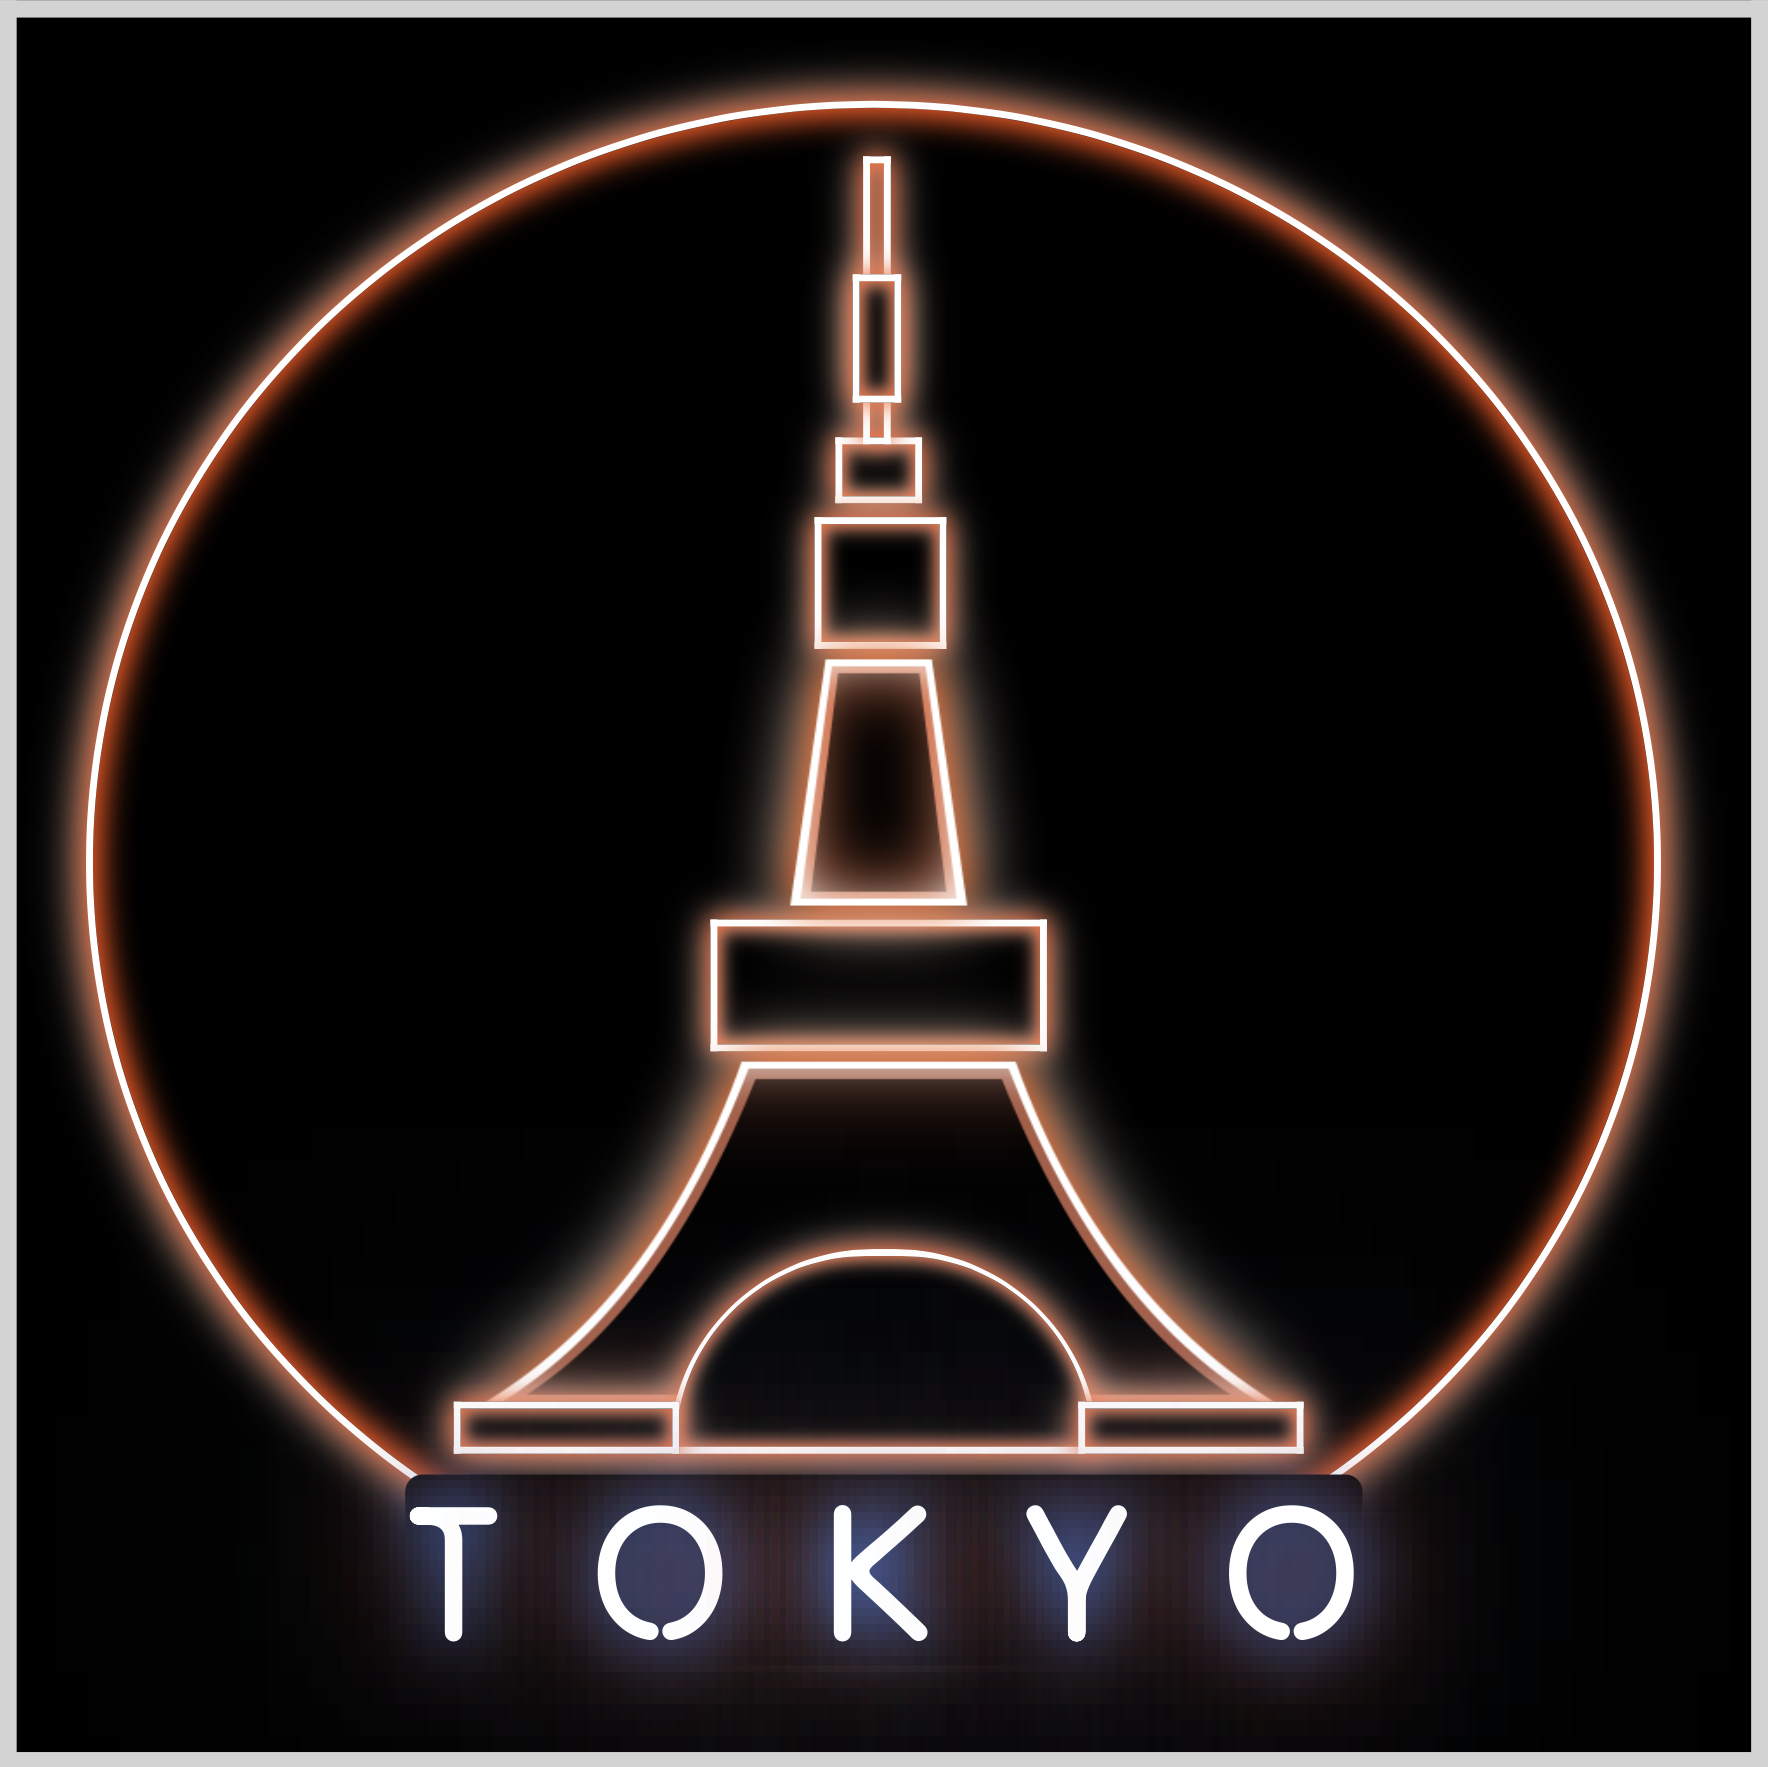 Tokyo Text - Light blue shadow applied